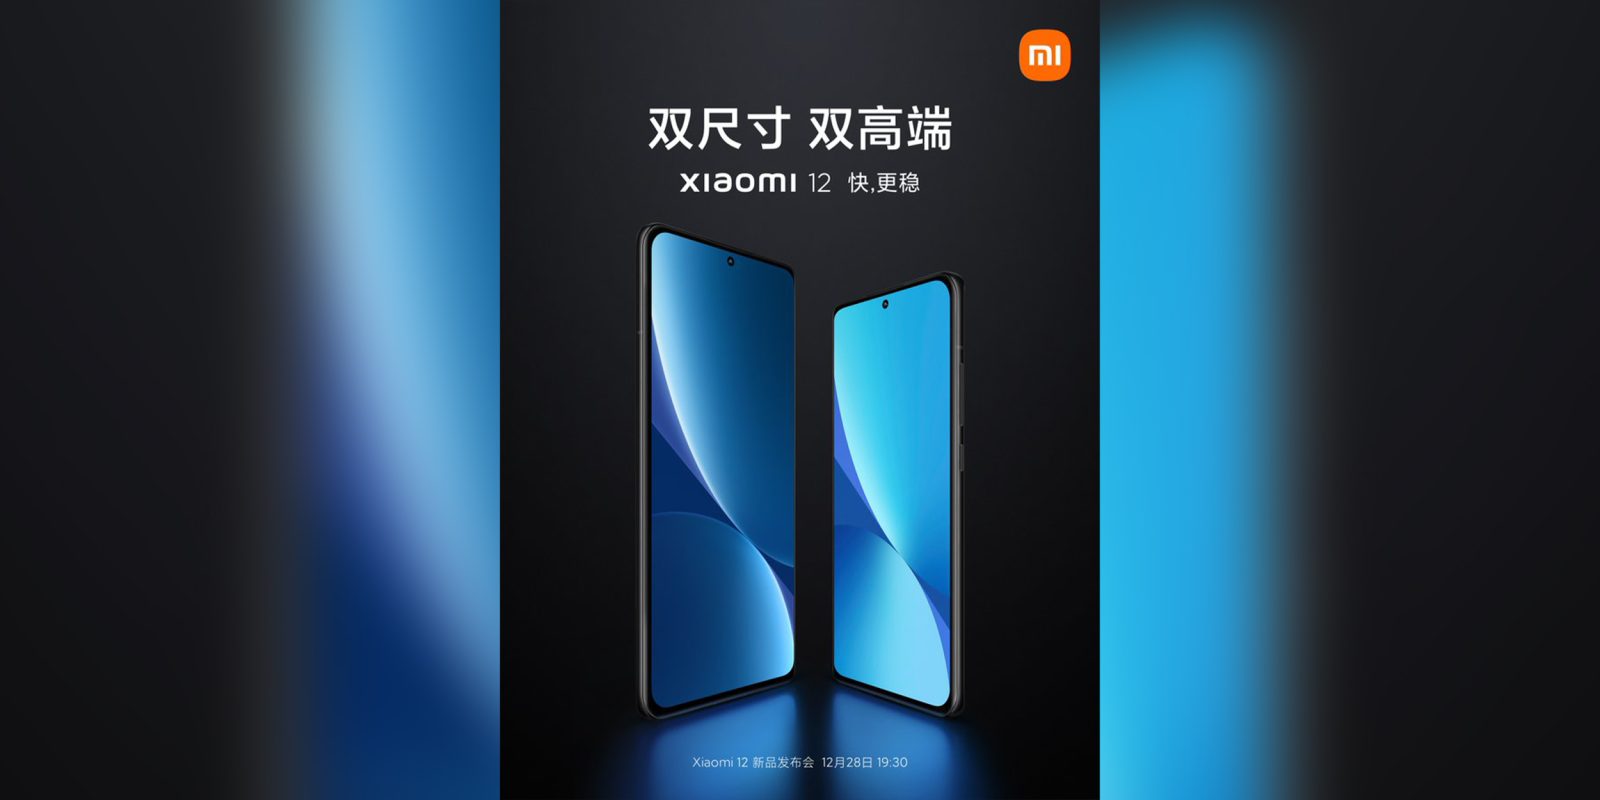 Xiaomi 12 series launch date in China